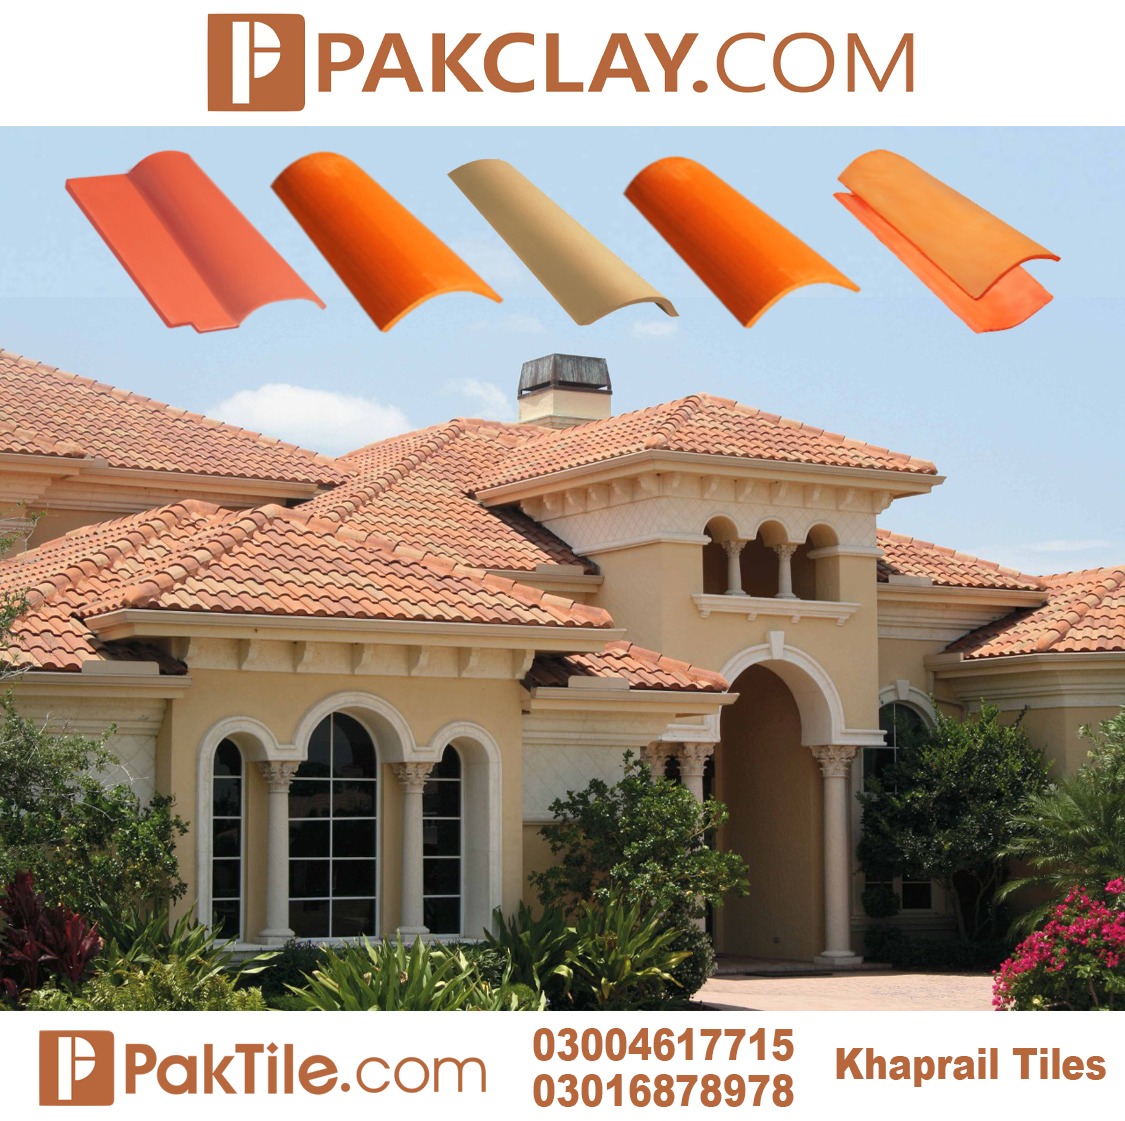 Pak clay roof tile price in pakistan